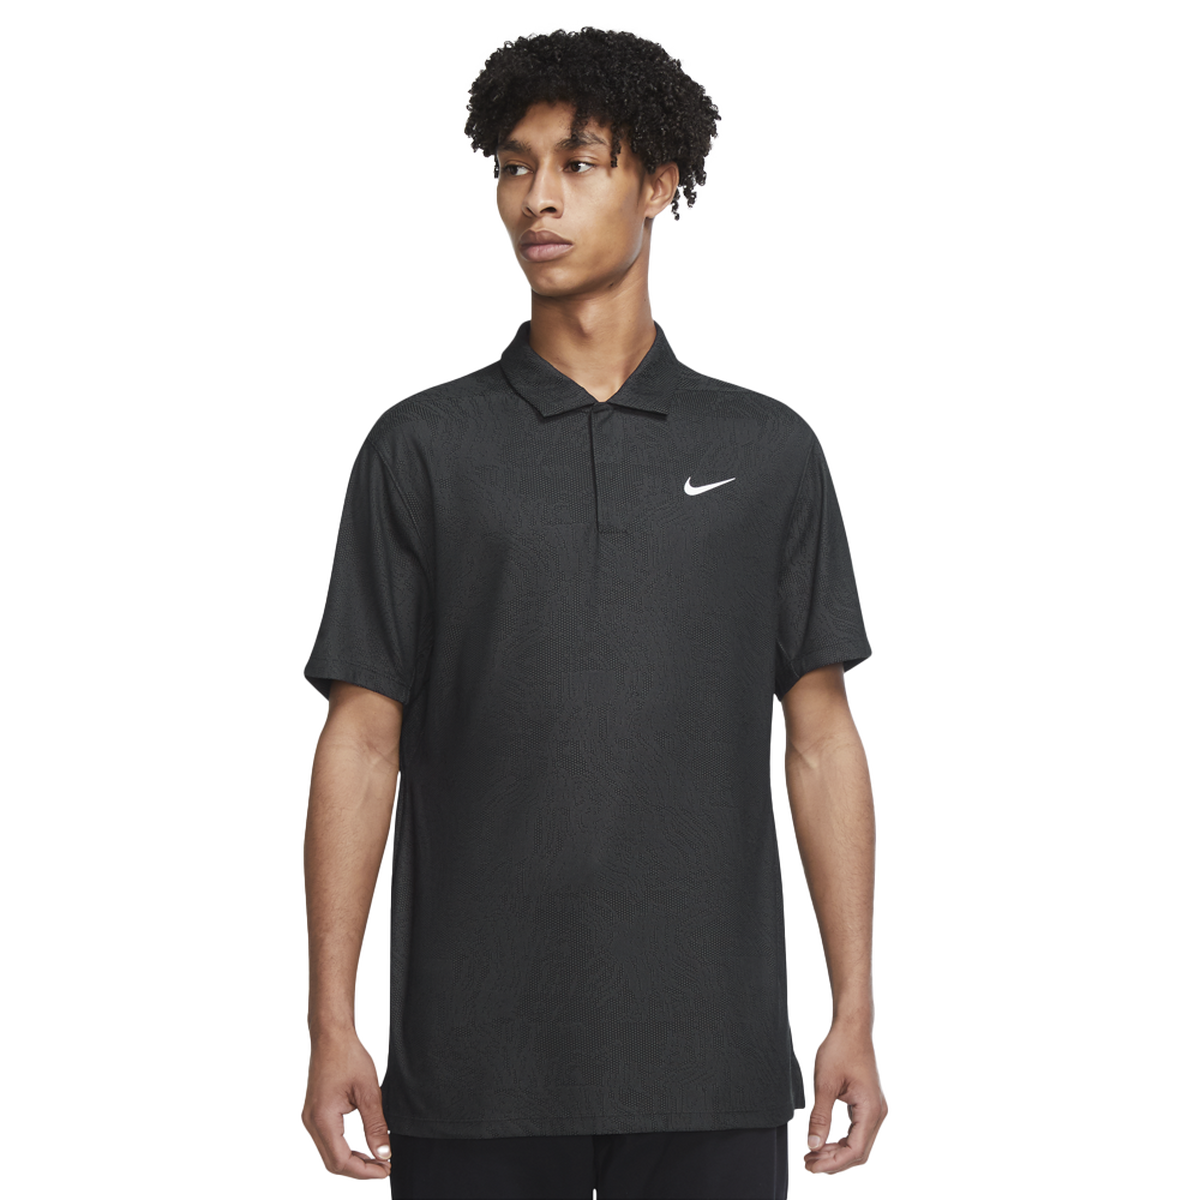 Nike | DH0711-070 | Dri-FIT | ADV Tiger Woods Golf Polo | Black